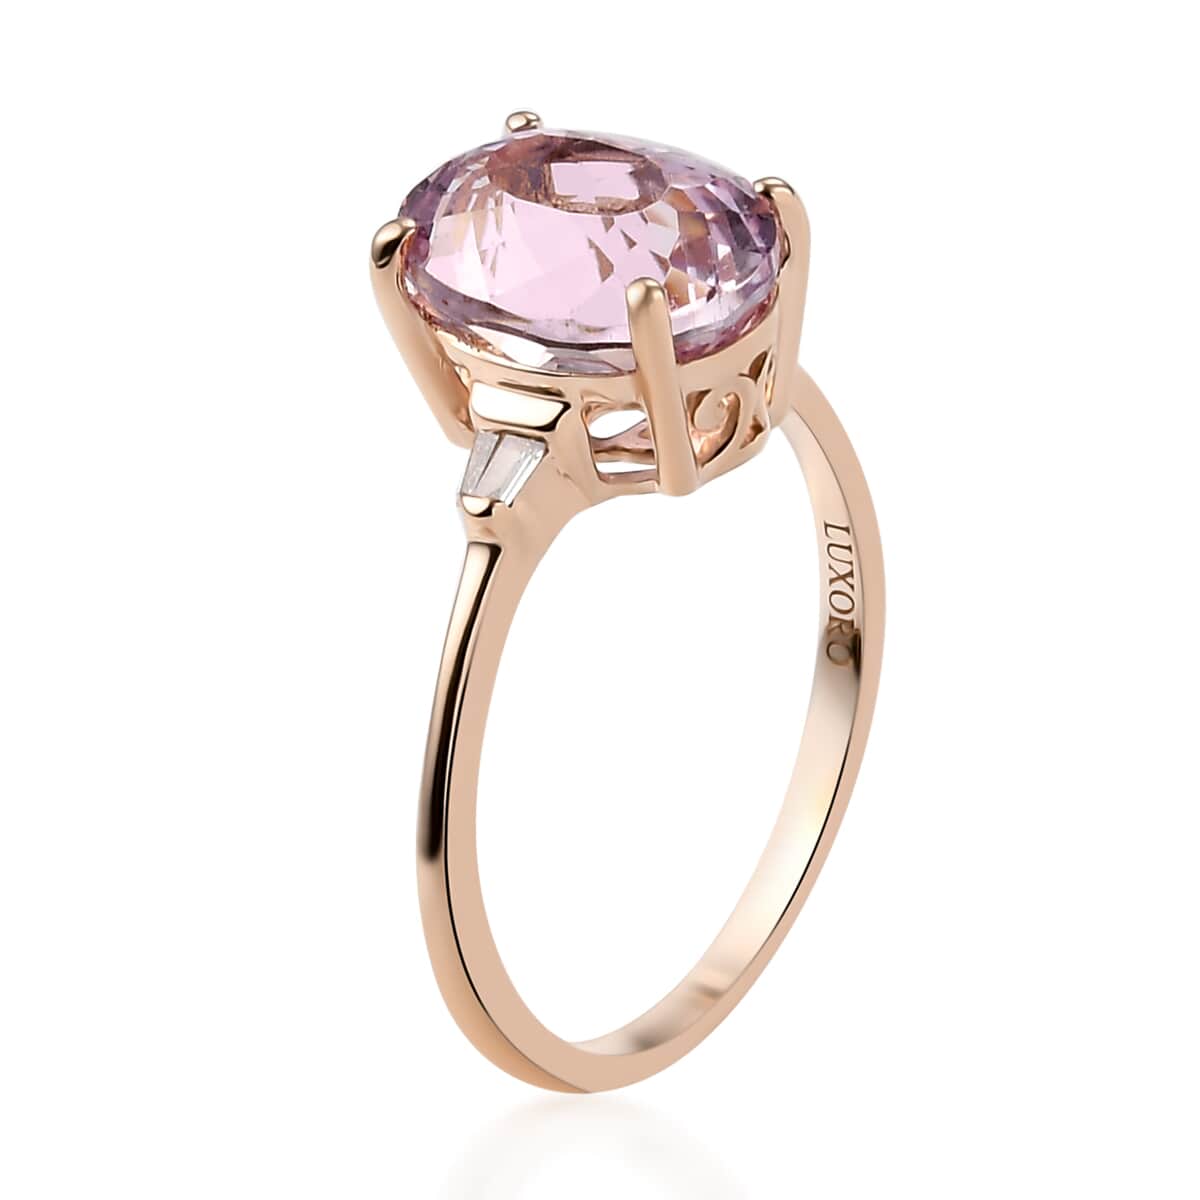 LUXORO 10K Rose Gold Premium Kunzite and Diamond Accent Ring (Size 10.0) 2 Grams 3.60 ctw image number 3